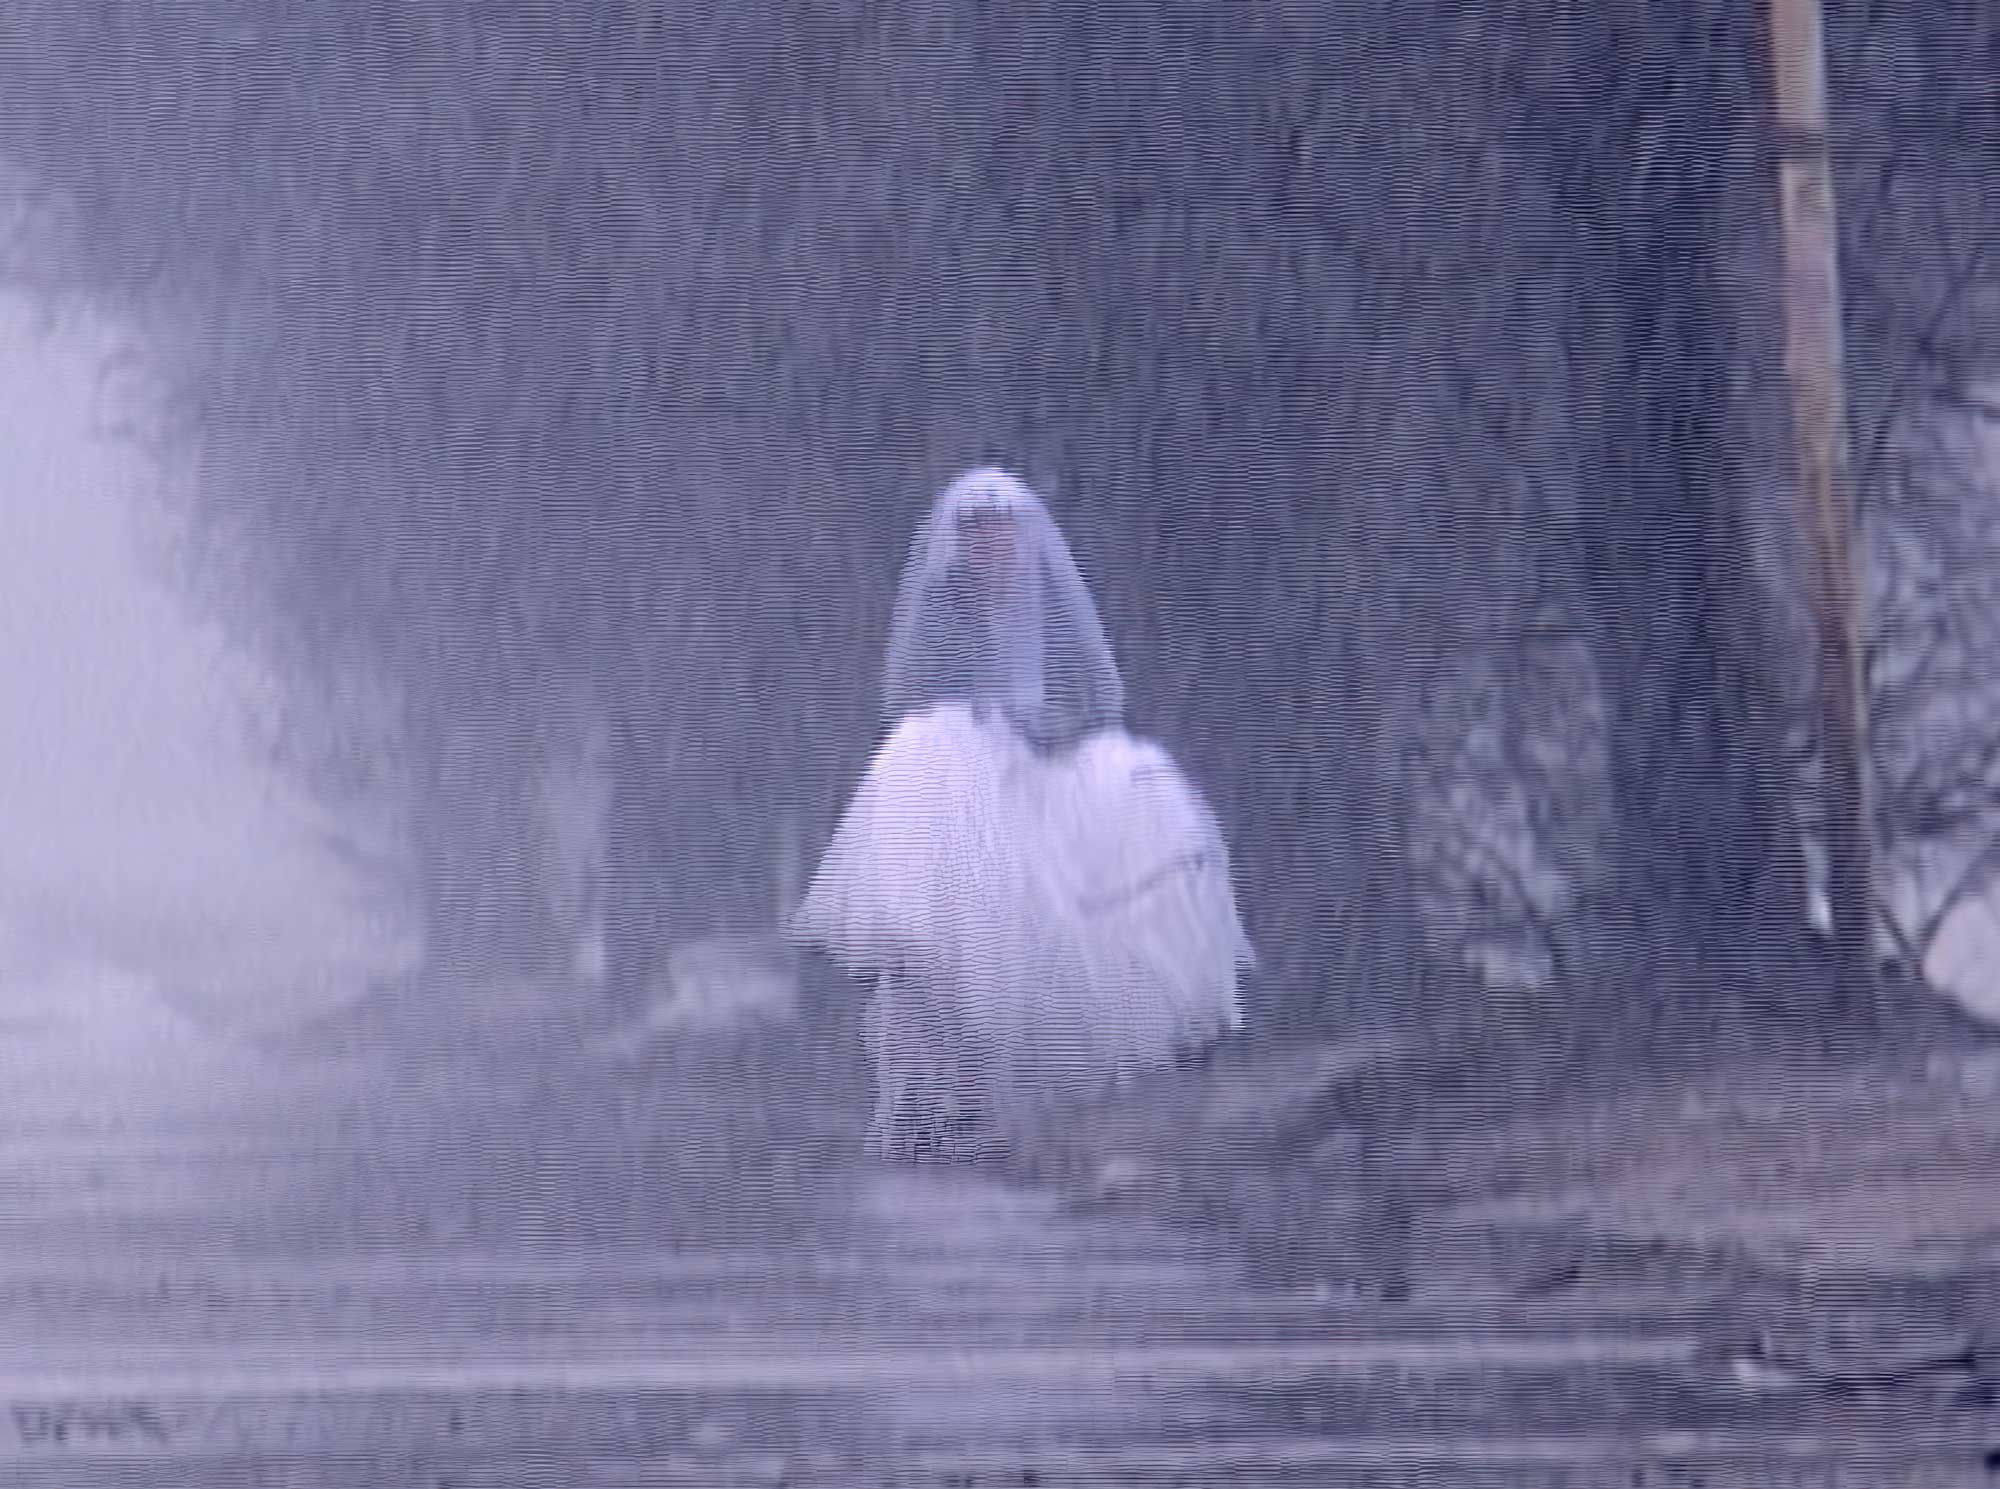 Video still from Almagul Menlibayeva, Eternal Bride (2002). Courtesy of the artist.